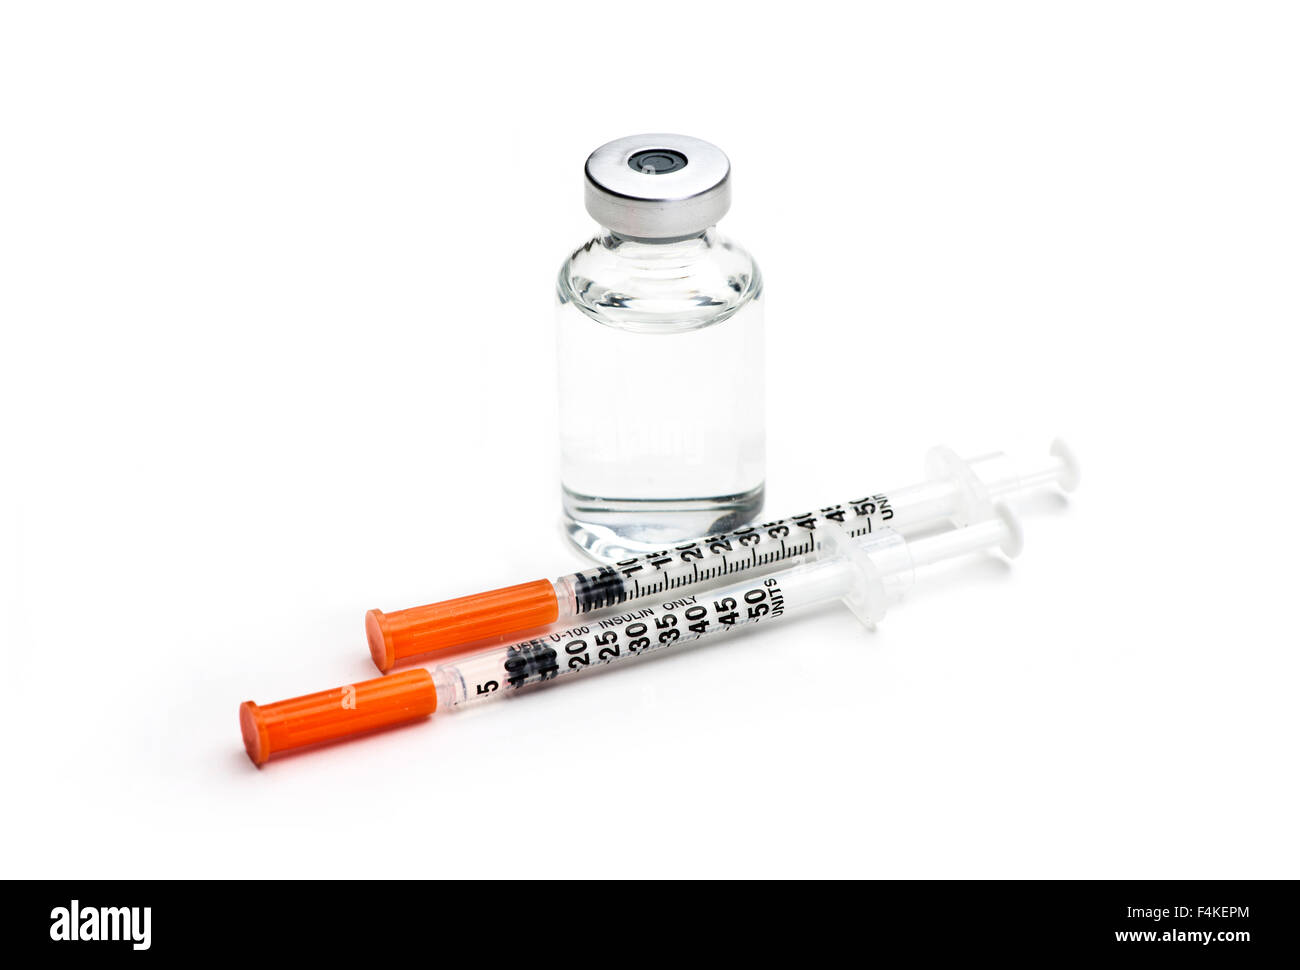 Jeringas de insulina archivos - Medica Marquet